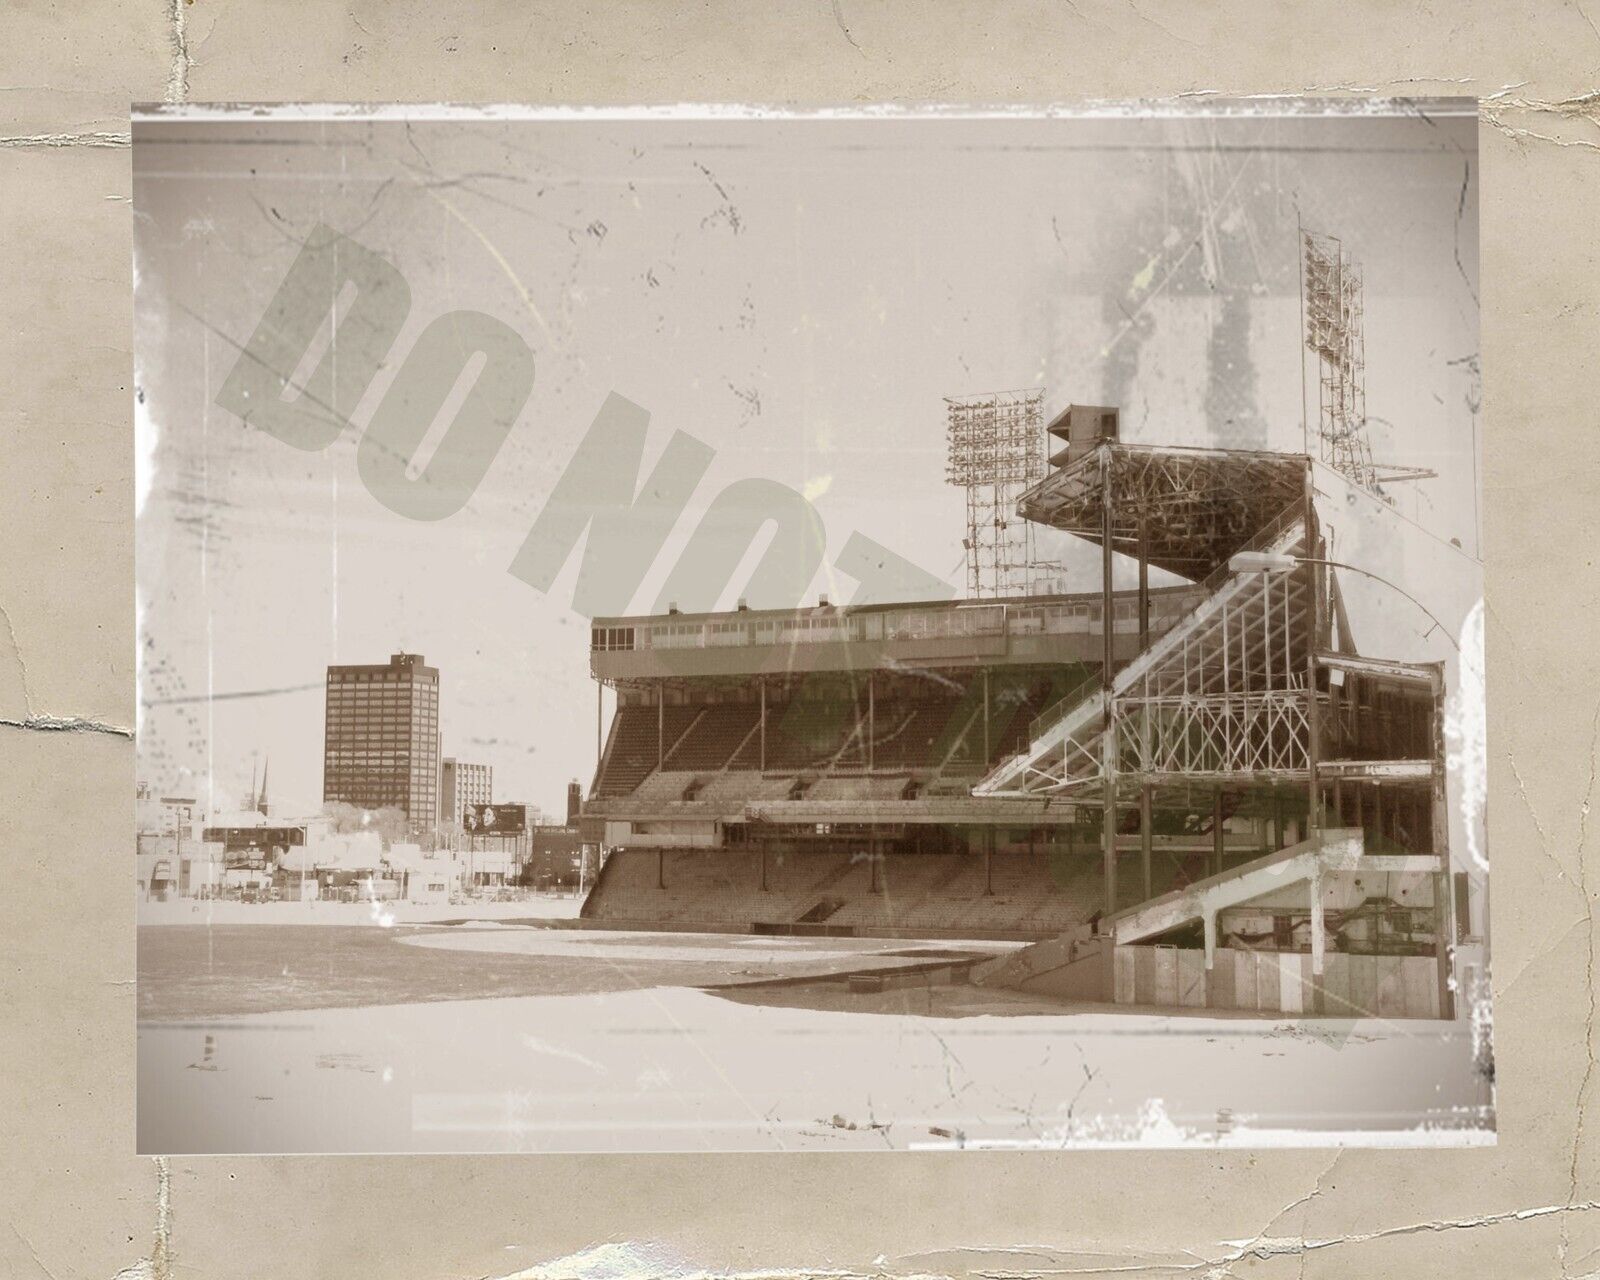 Detroit Tigers Baseball Stadium Ruins Vintage Worn Out Look 8x10 Photo